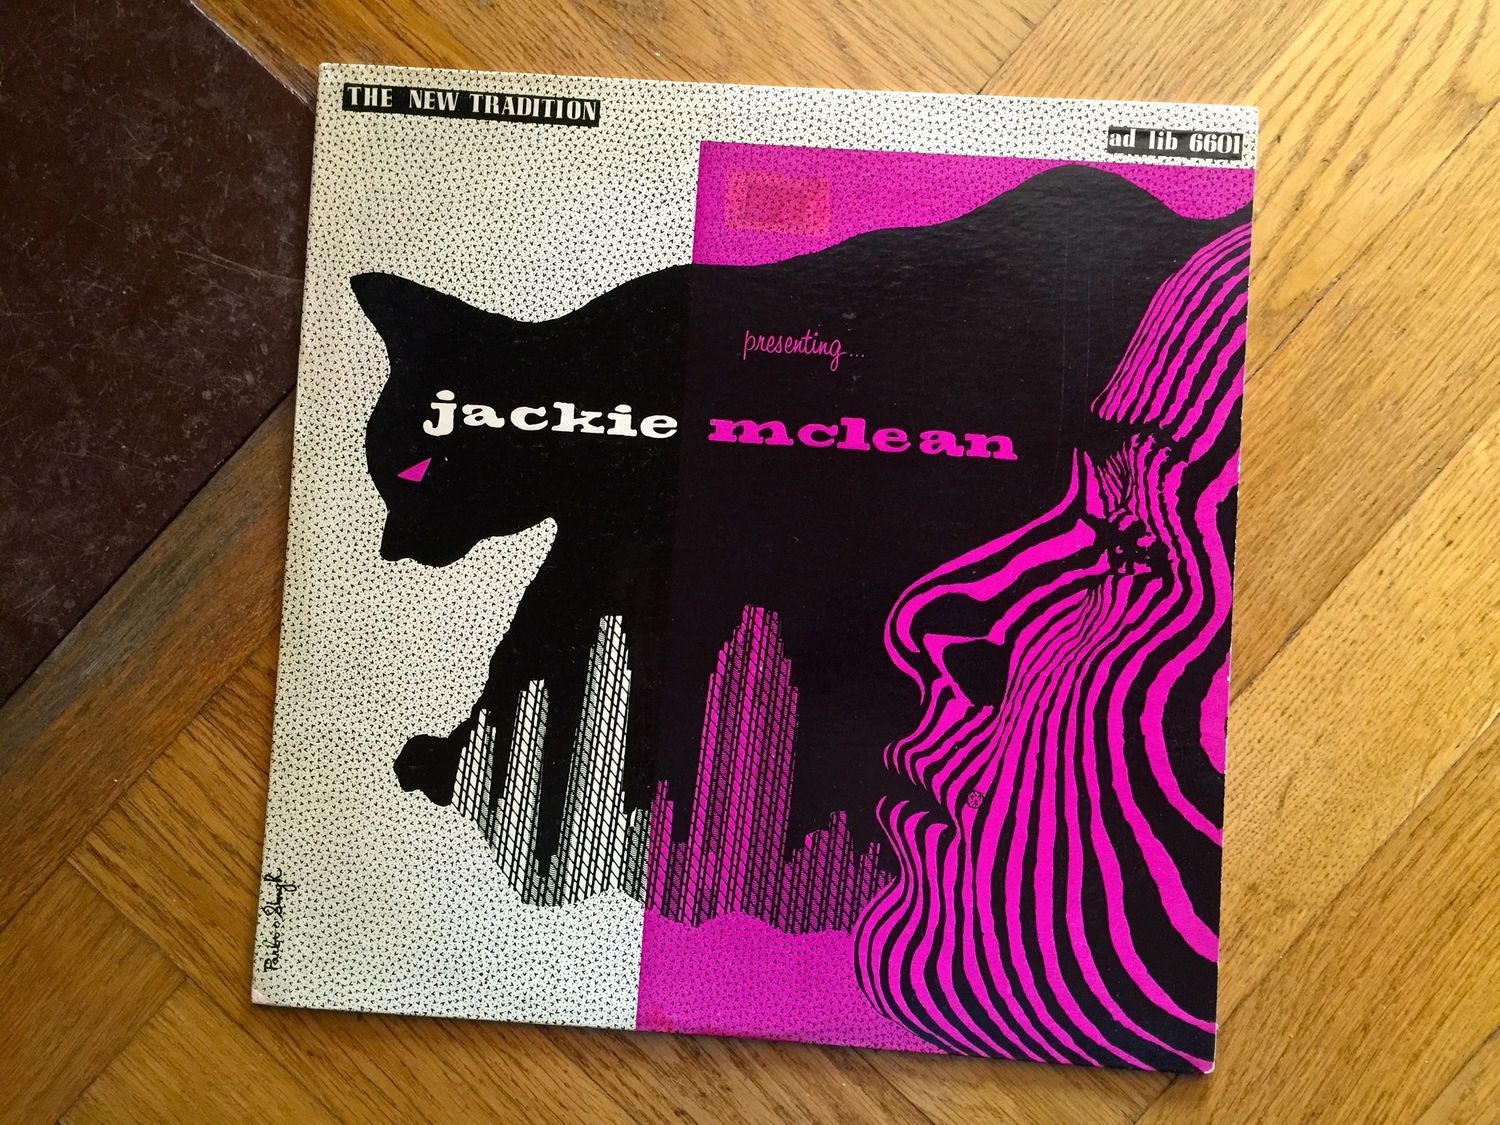 EXTREMELY RARE JAZZ   JACKIE MCCLEAN   AD LIB 6601  1000  RECORD LP NEW TRADITIN